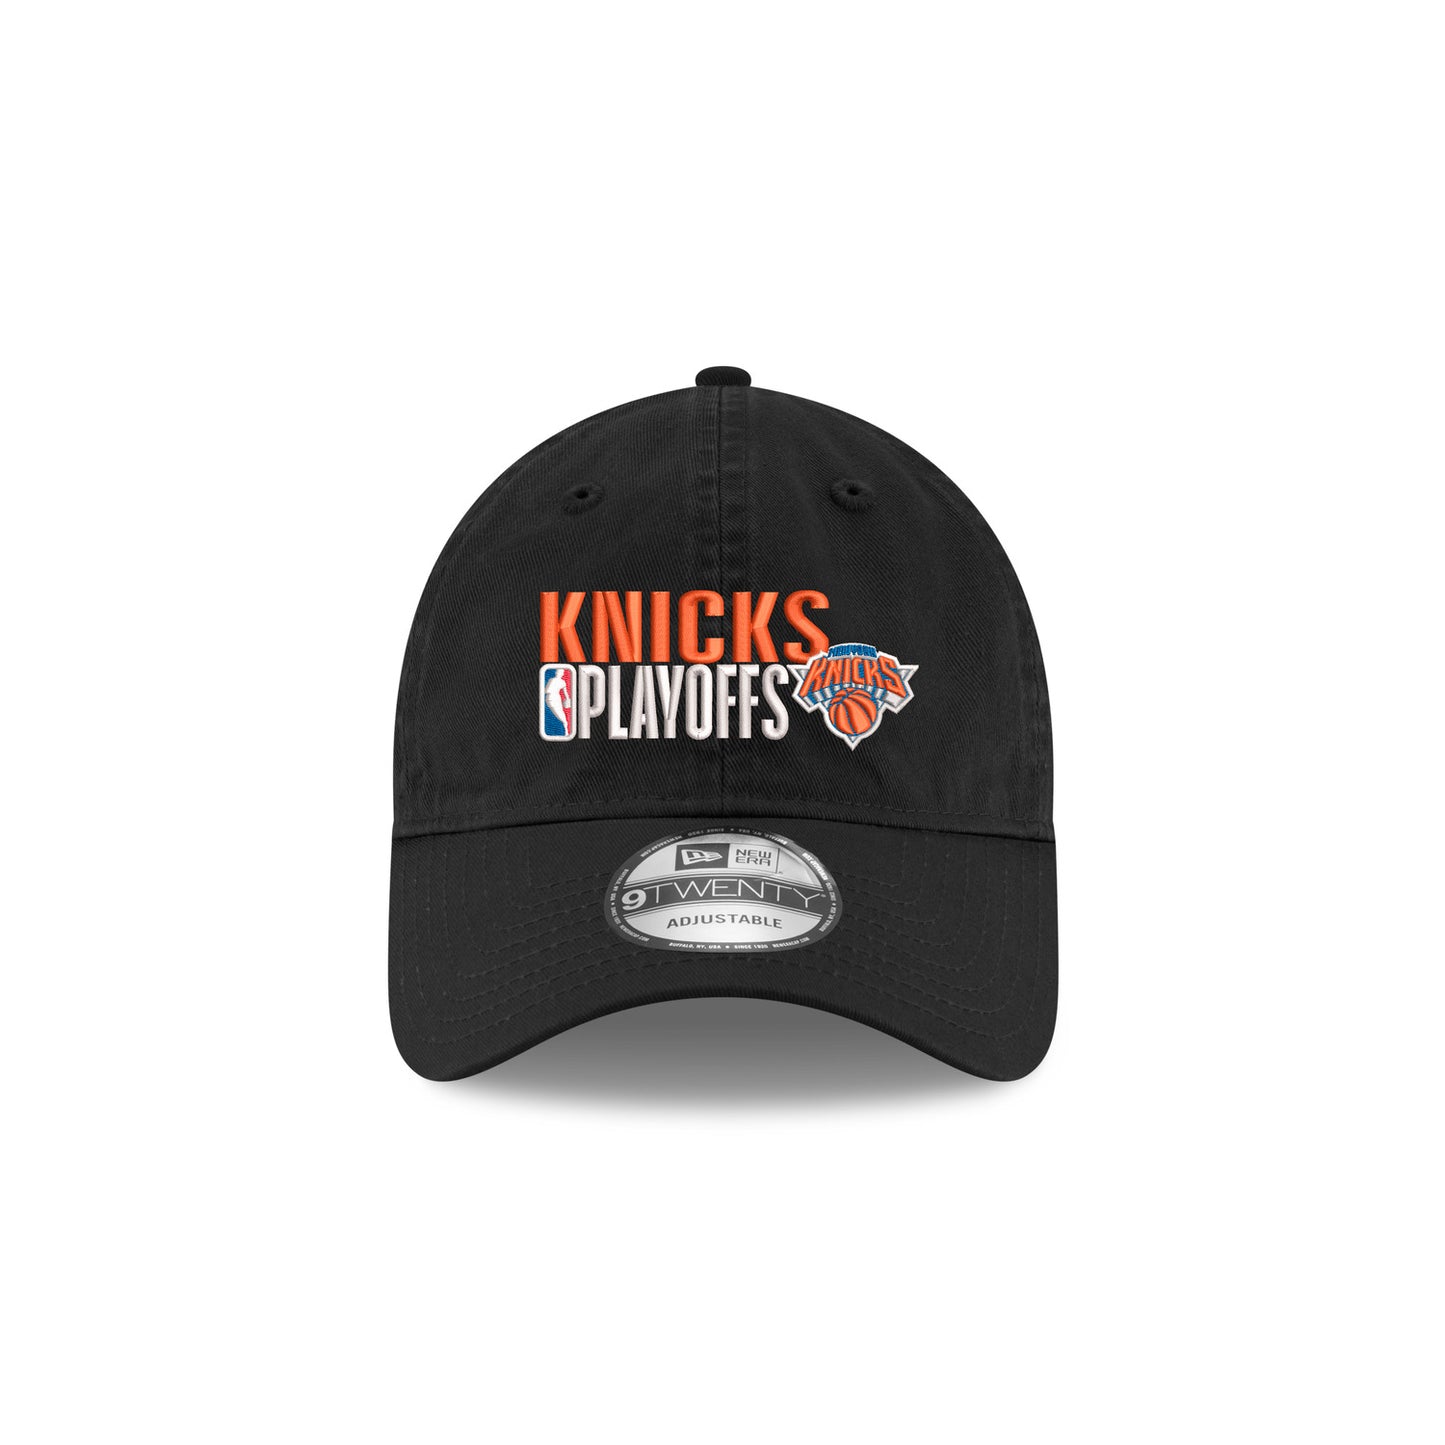 New Era Knicks Playoff Participant Hat